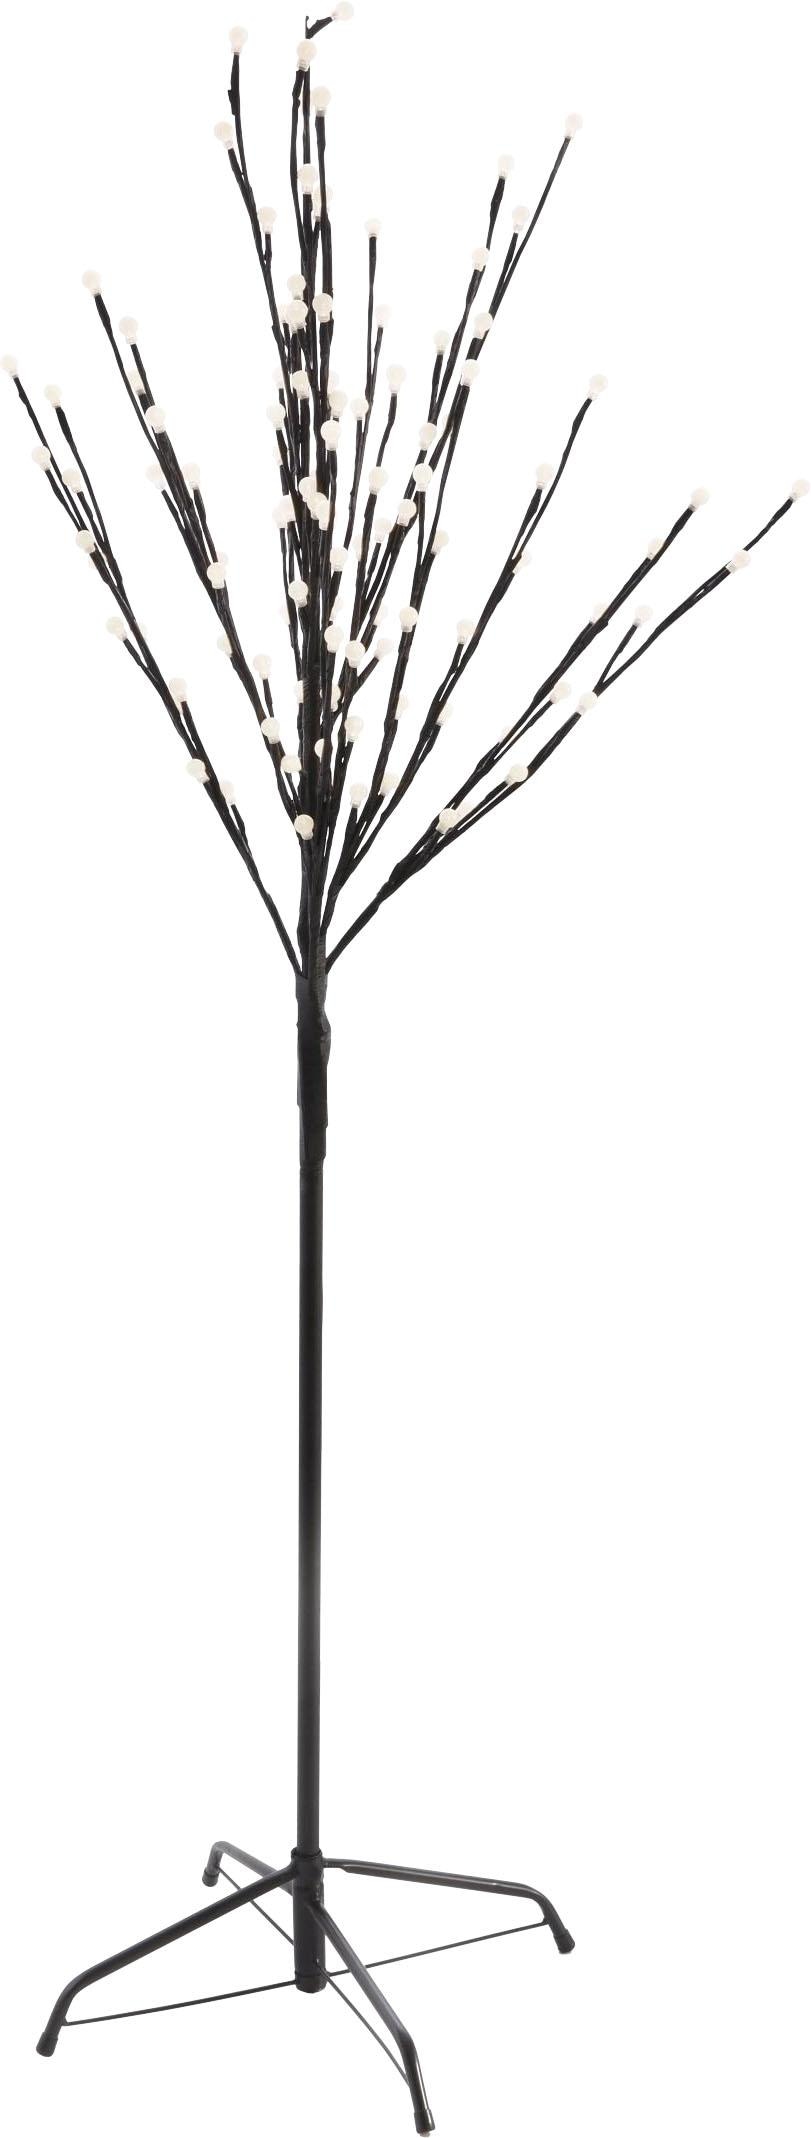 BONETTI LED Baum, 500 flammig-flammig, Weihnachtsdeko